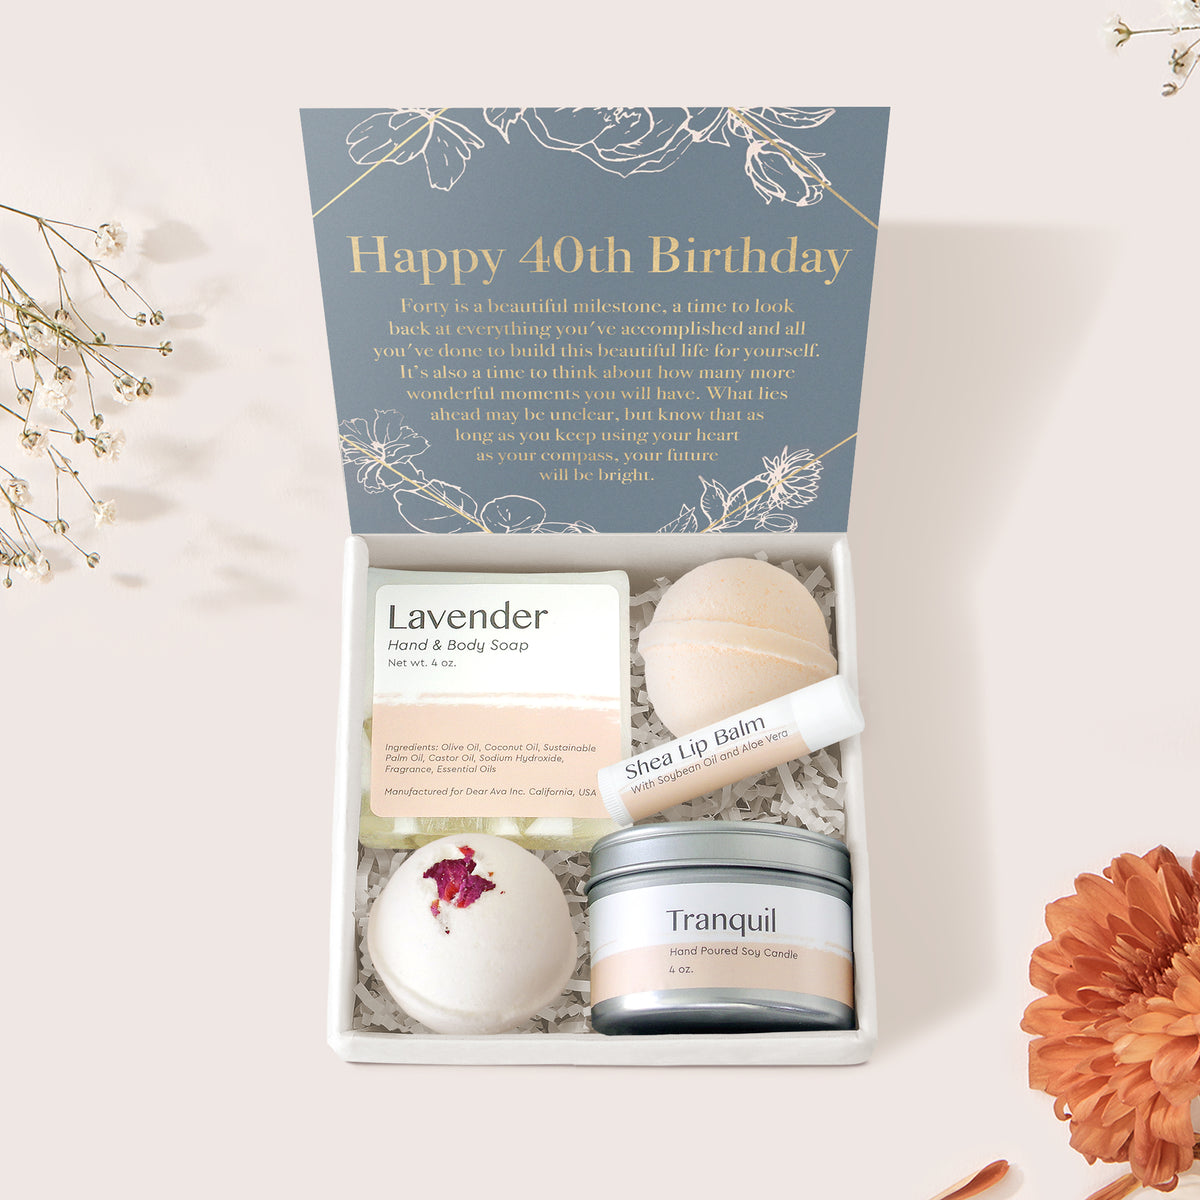 Birthday Celebration | Curated Gift Box | Kadoo NYC